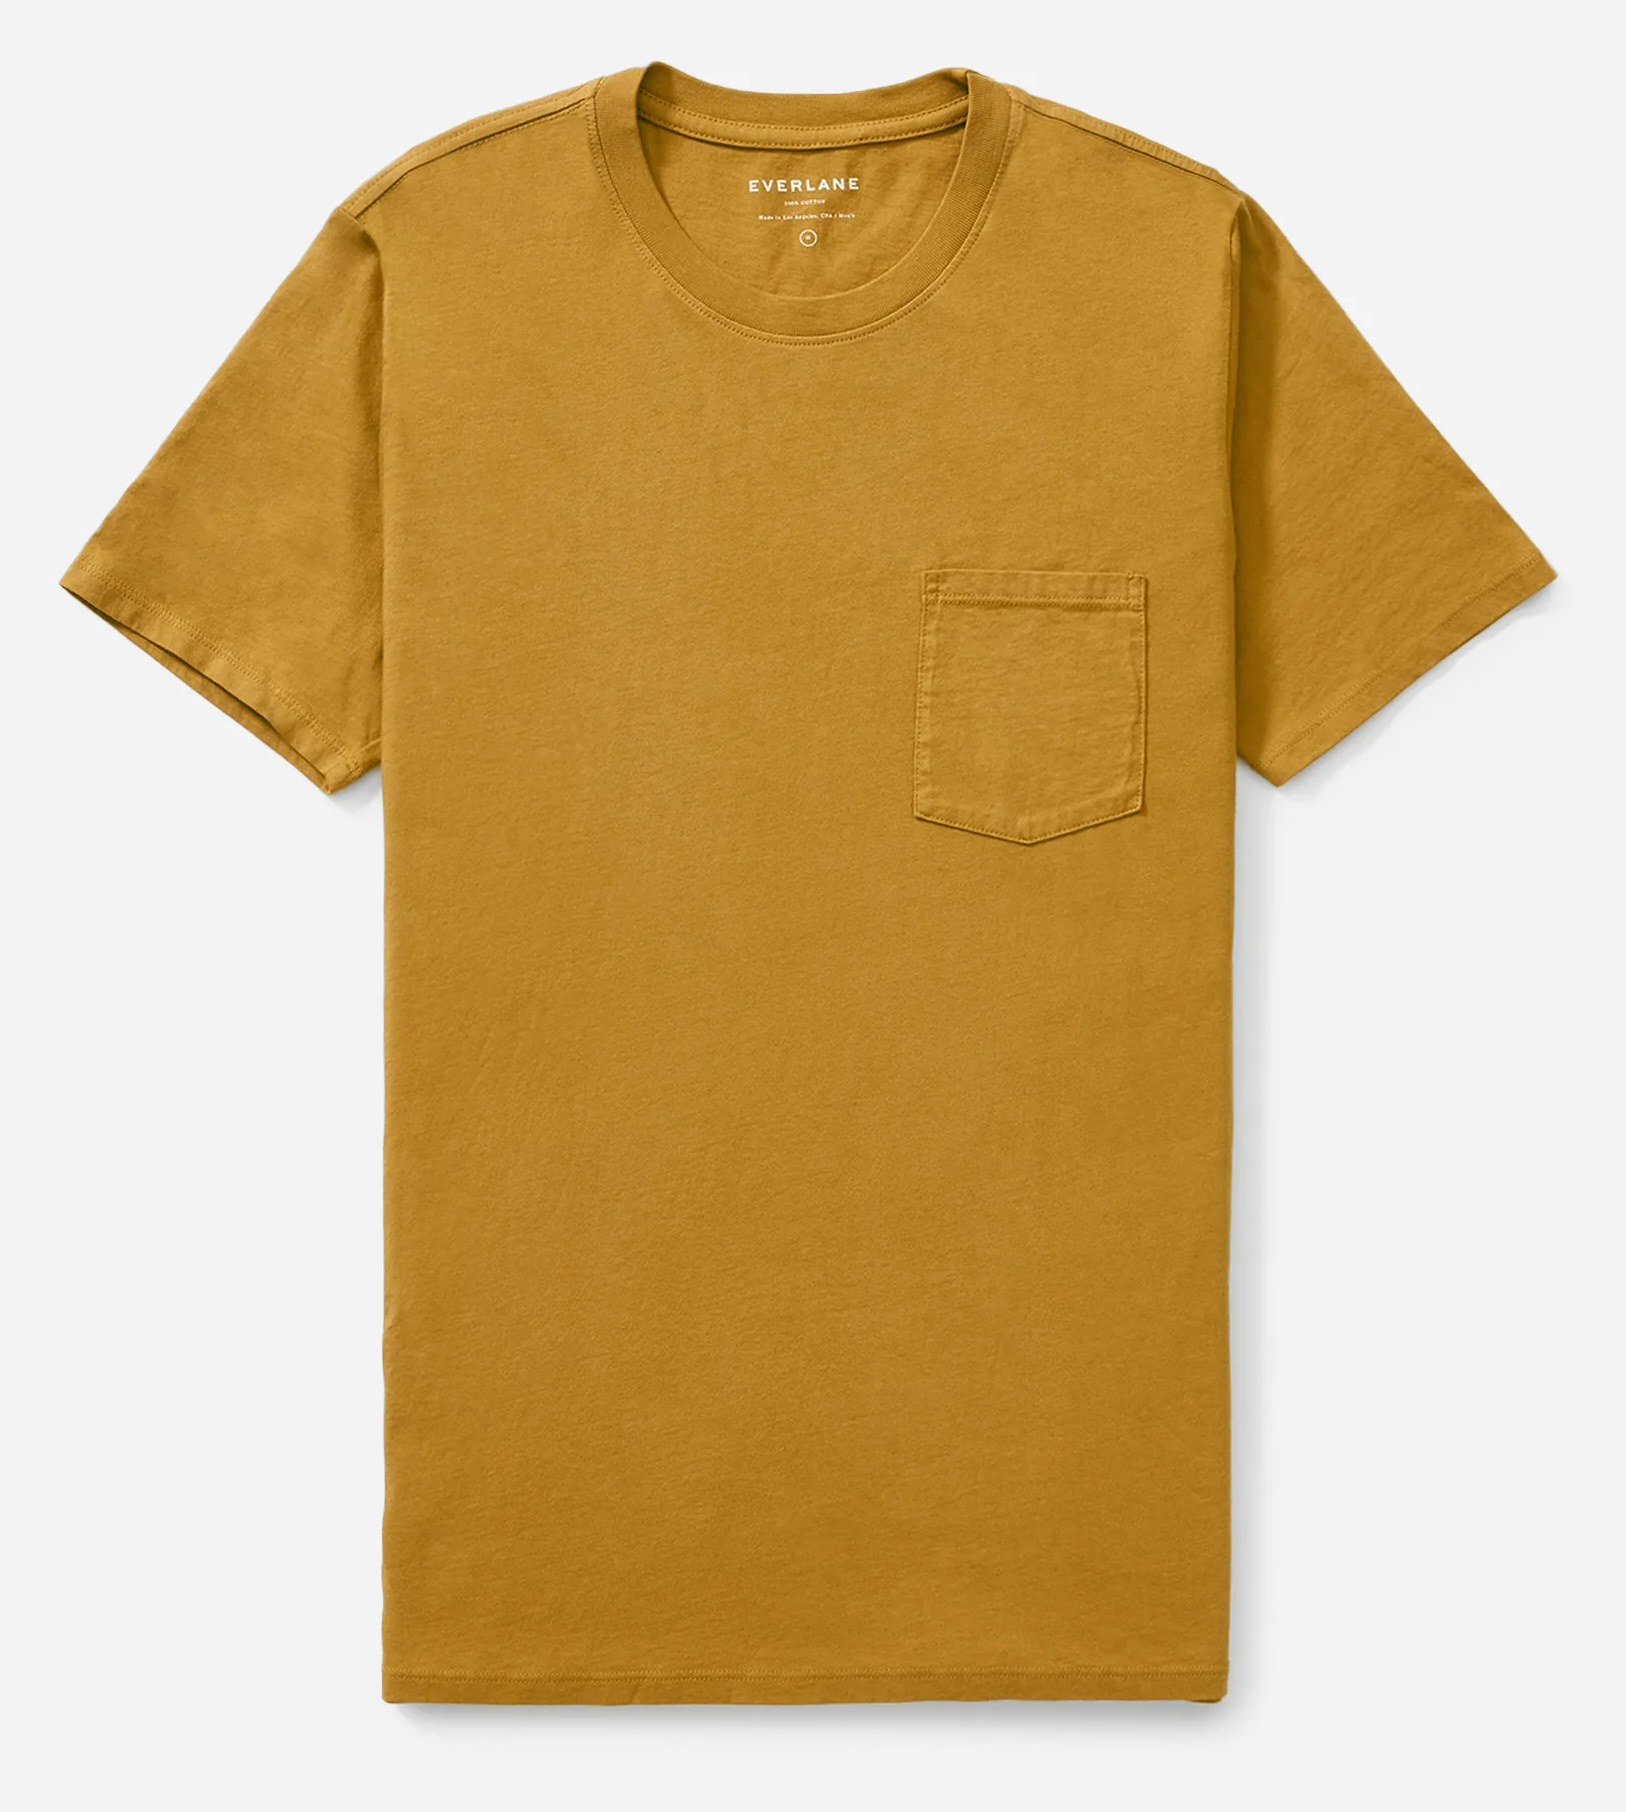 A brass-color Everlane pocket T-shirt